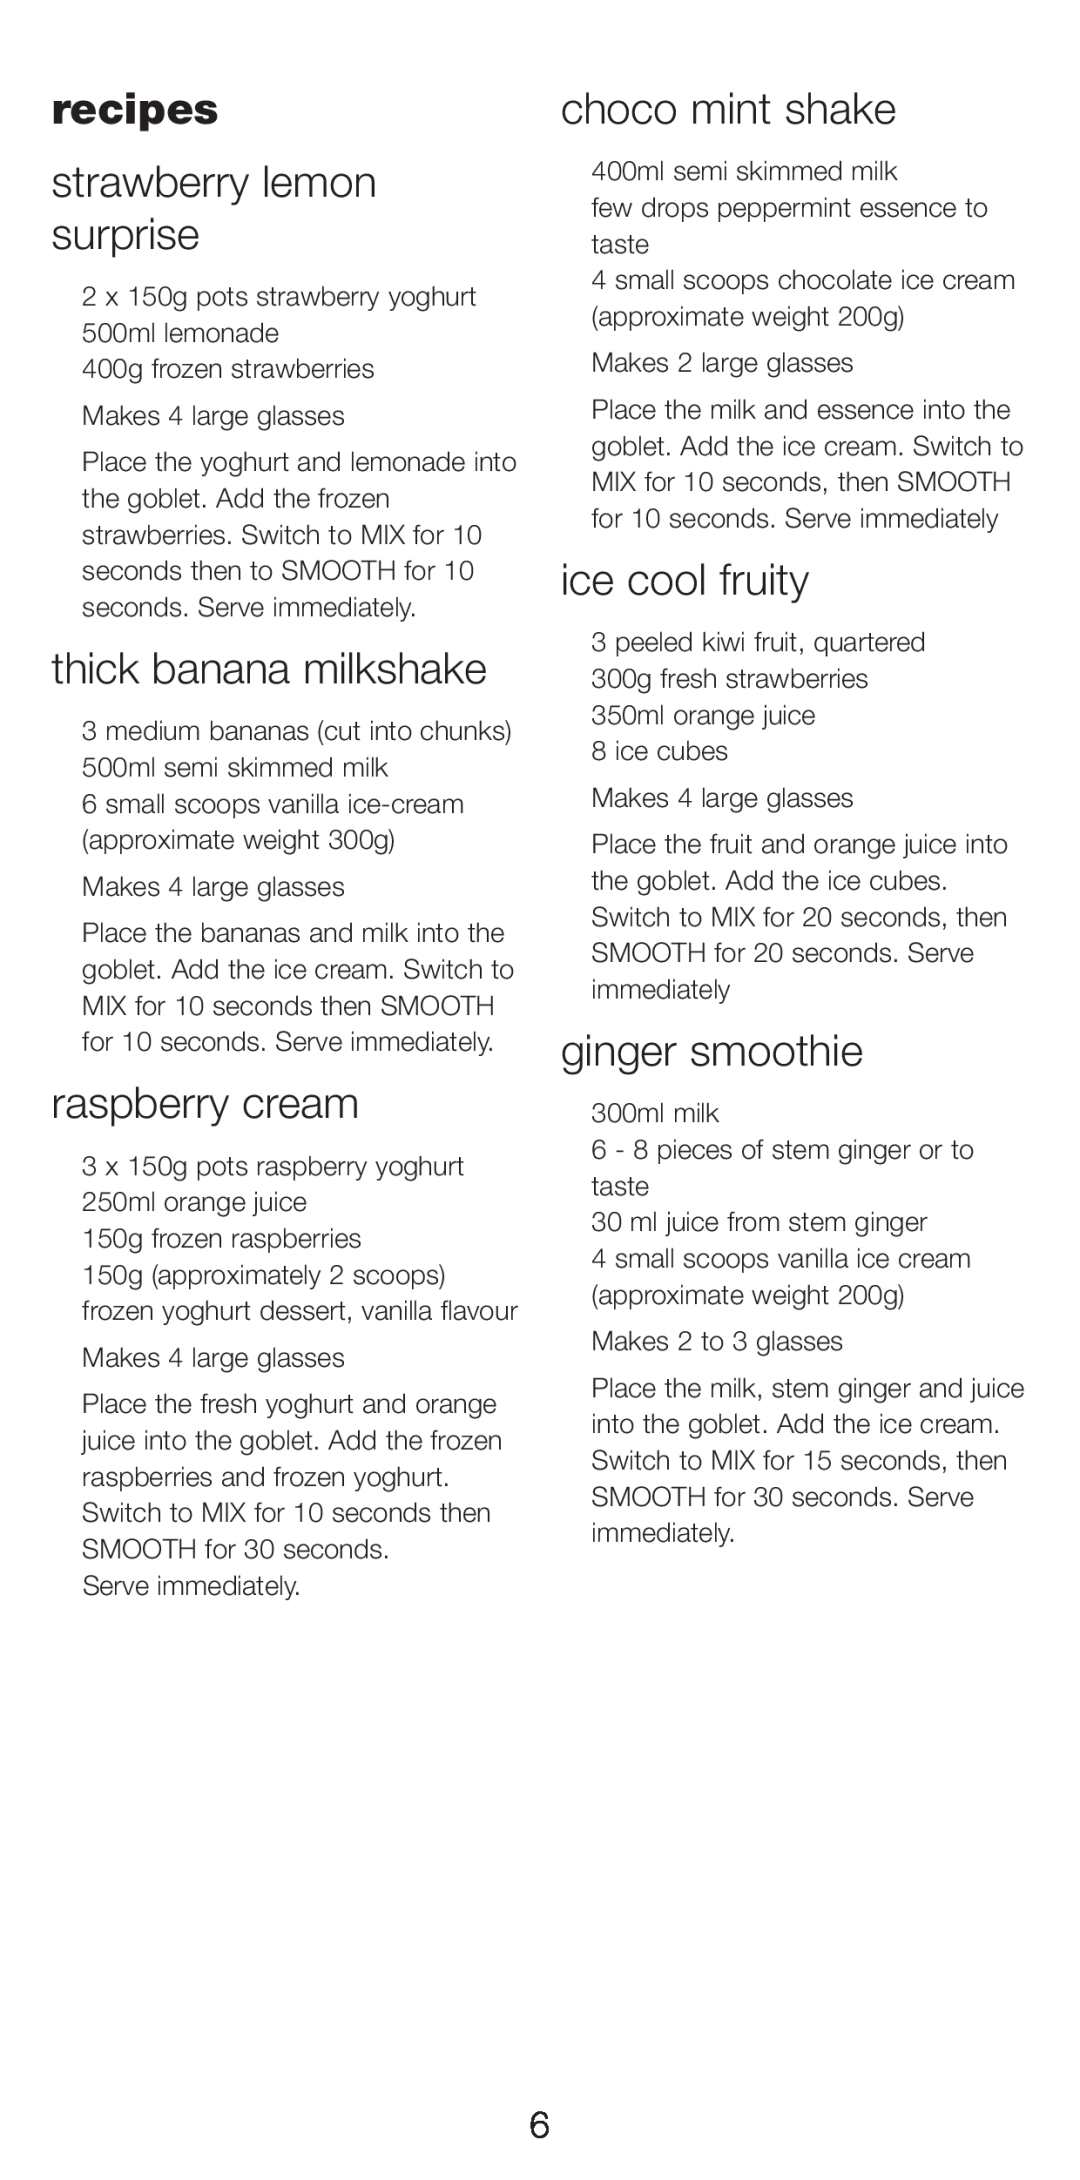 Kenwood SB250 manual recipes, strawberry lemon surprise, thick banana milkshake, raspberry cream, choco mint shake 